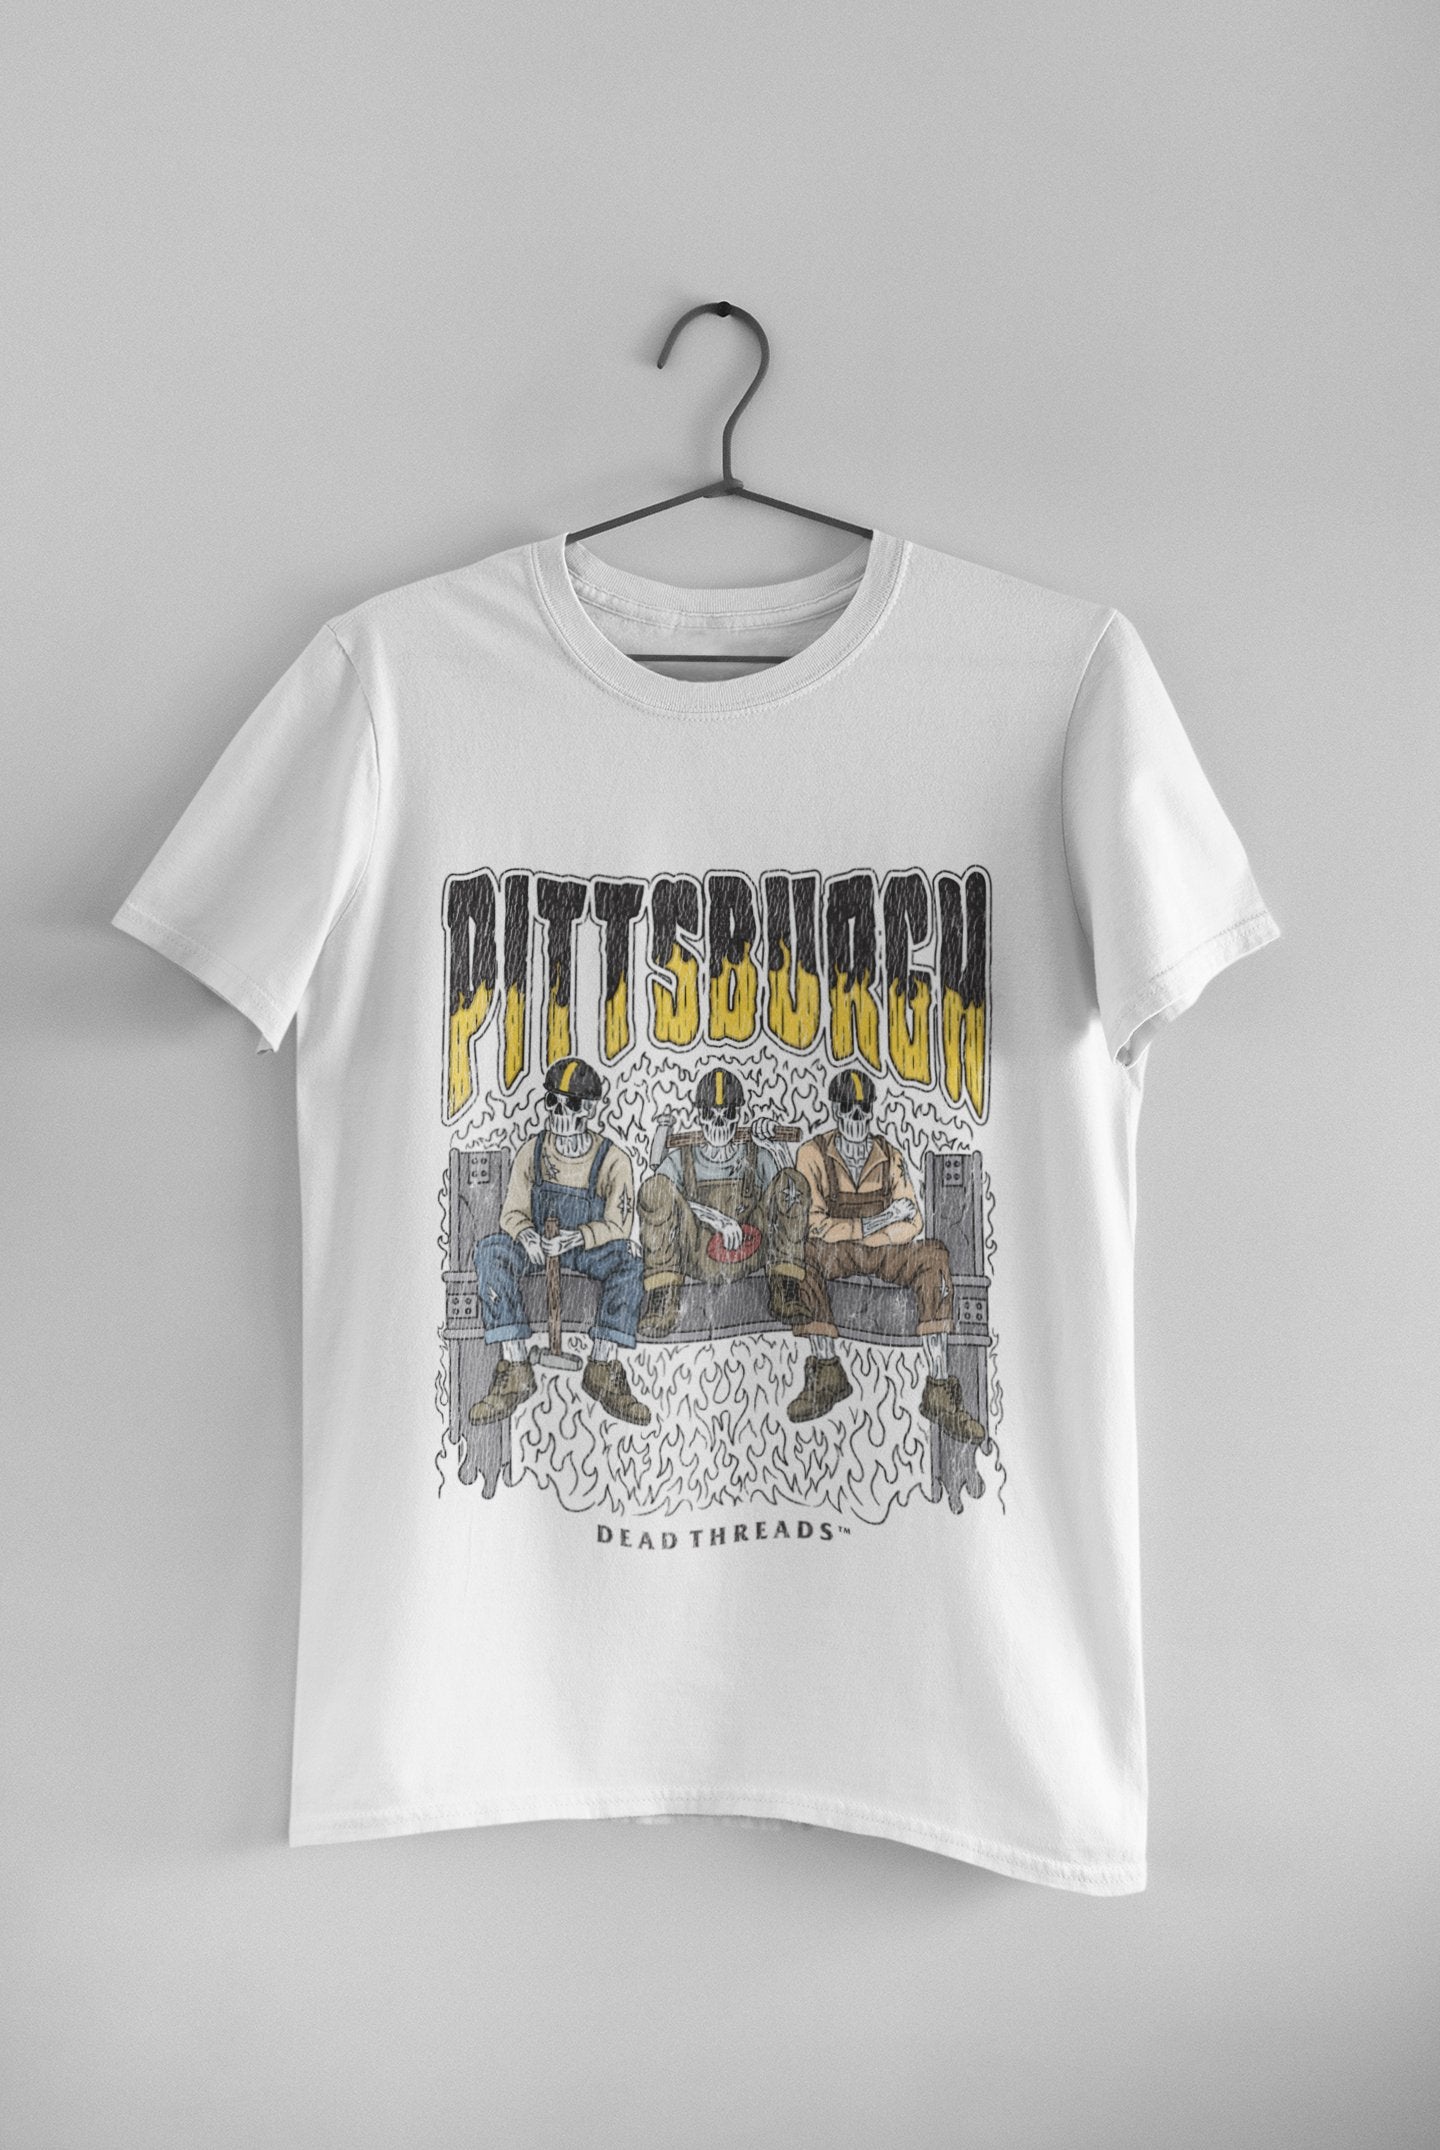 Pittsburgh Skeleton - Unisex t-shirt - Modern Vintage Apparel